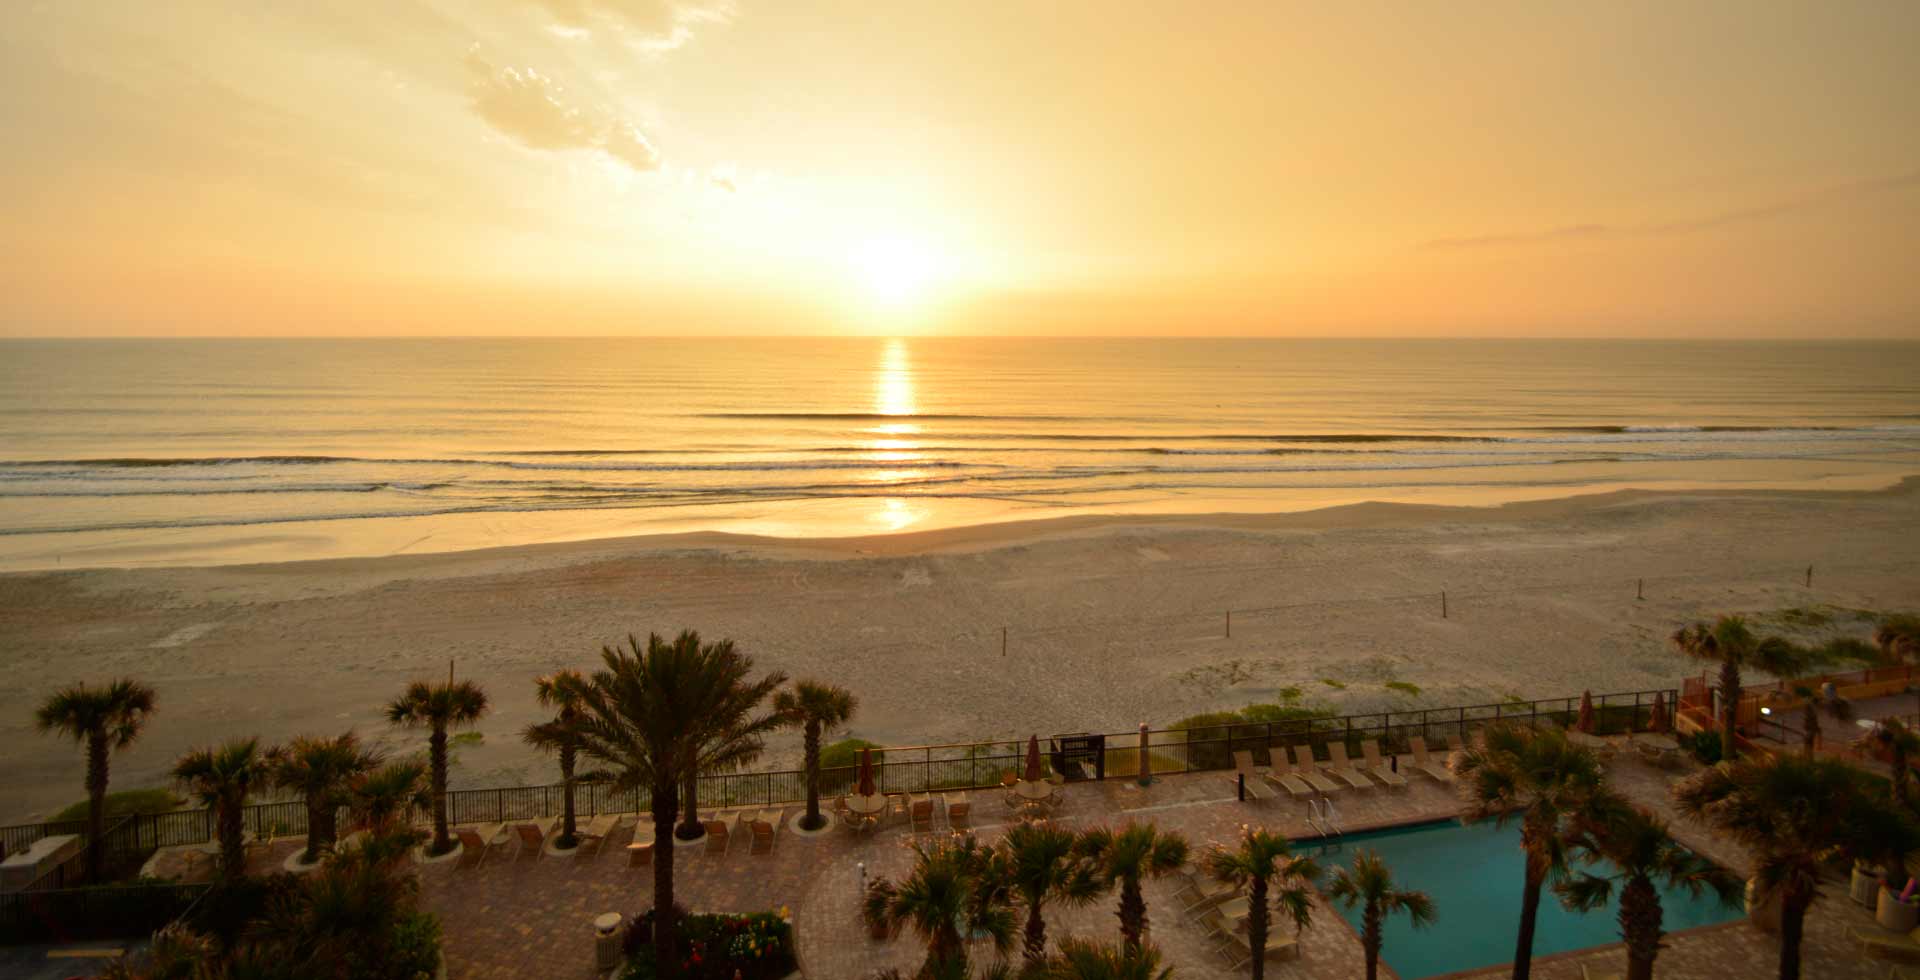 Sunrise beach view on Daytona Beach, Florida